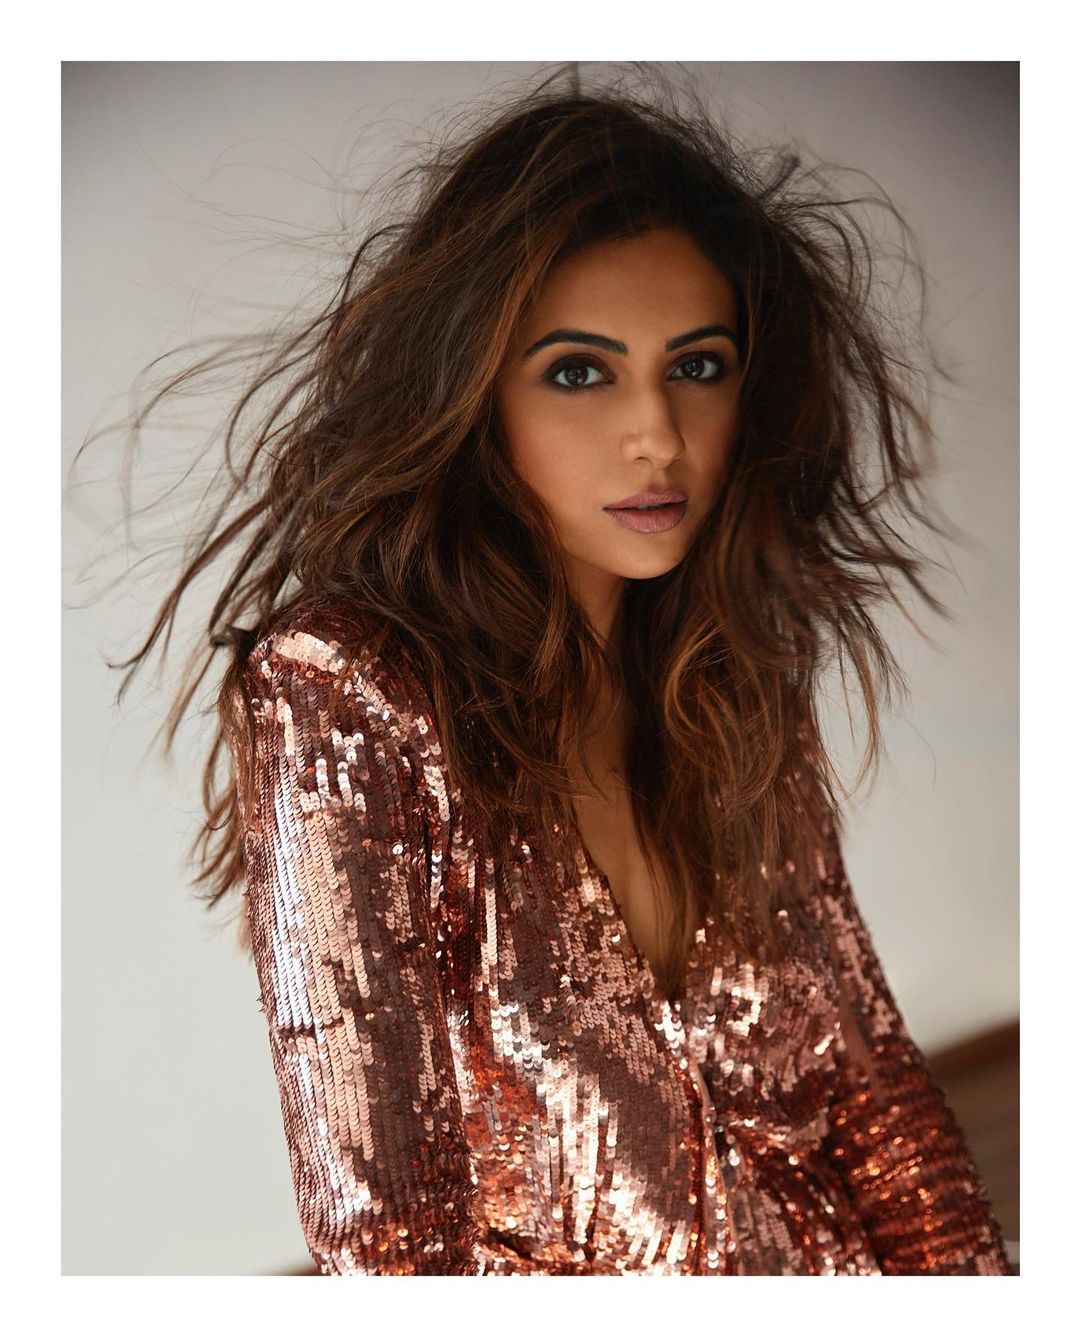  Rakul Preet in her glam avatar. (Image: Instagram)